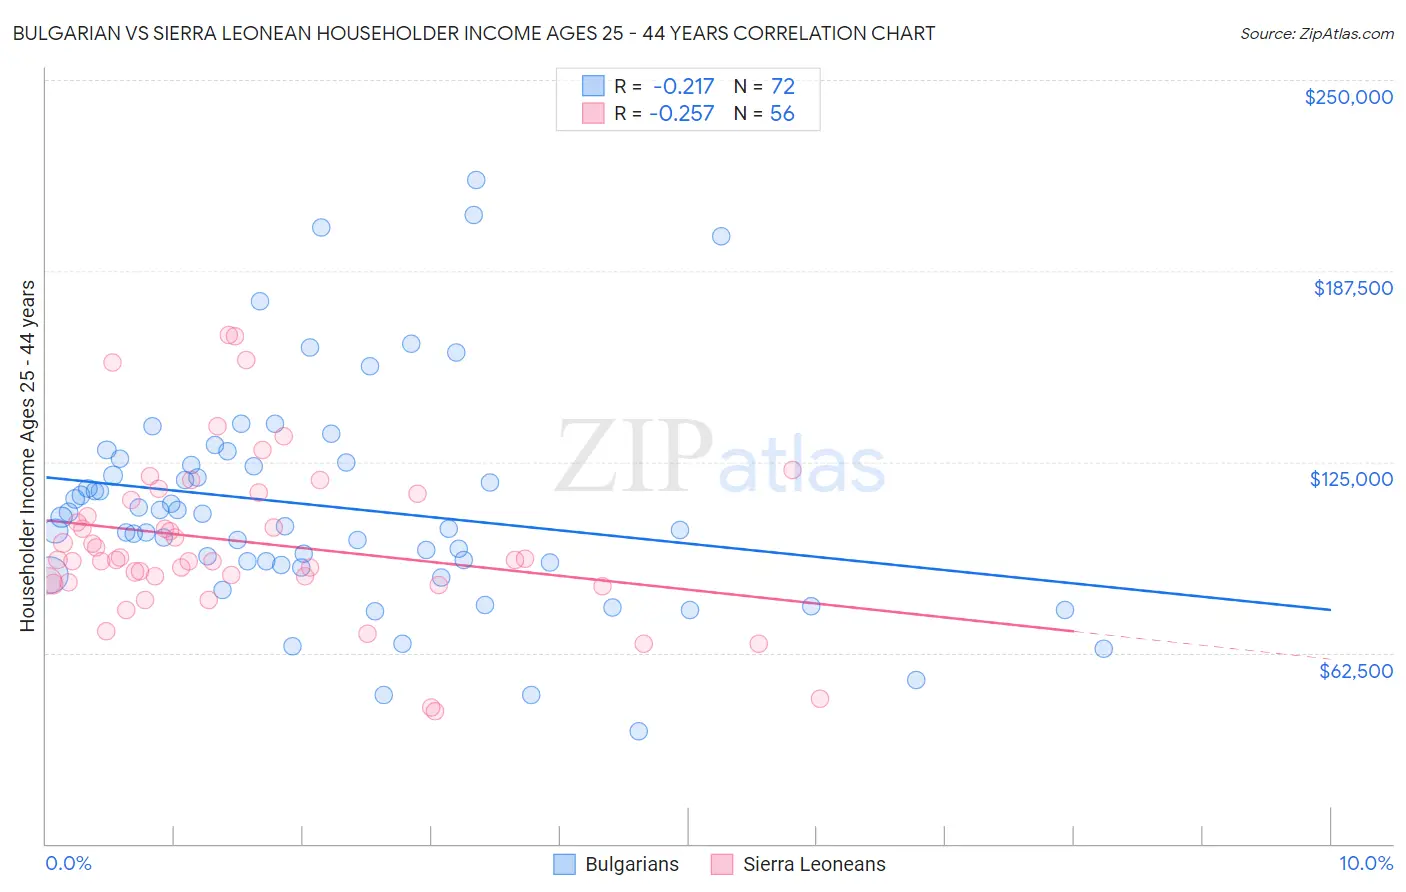 Bulgarian vs Sierra Leonean Householder Income Ages 25 - 44 years